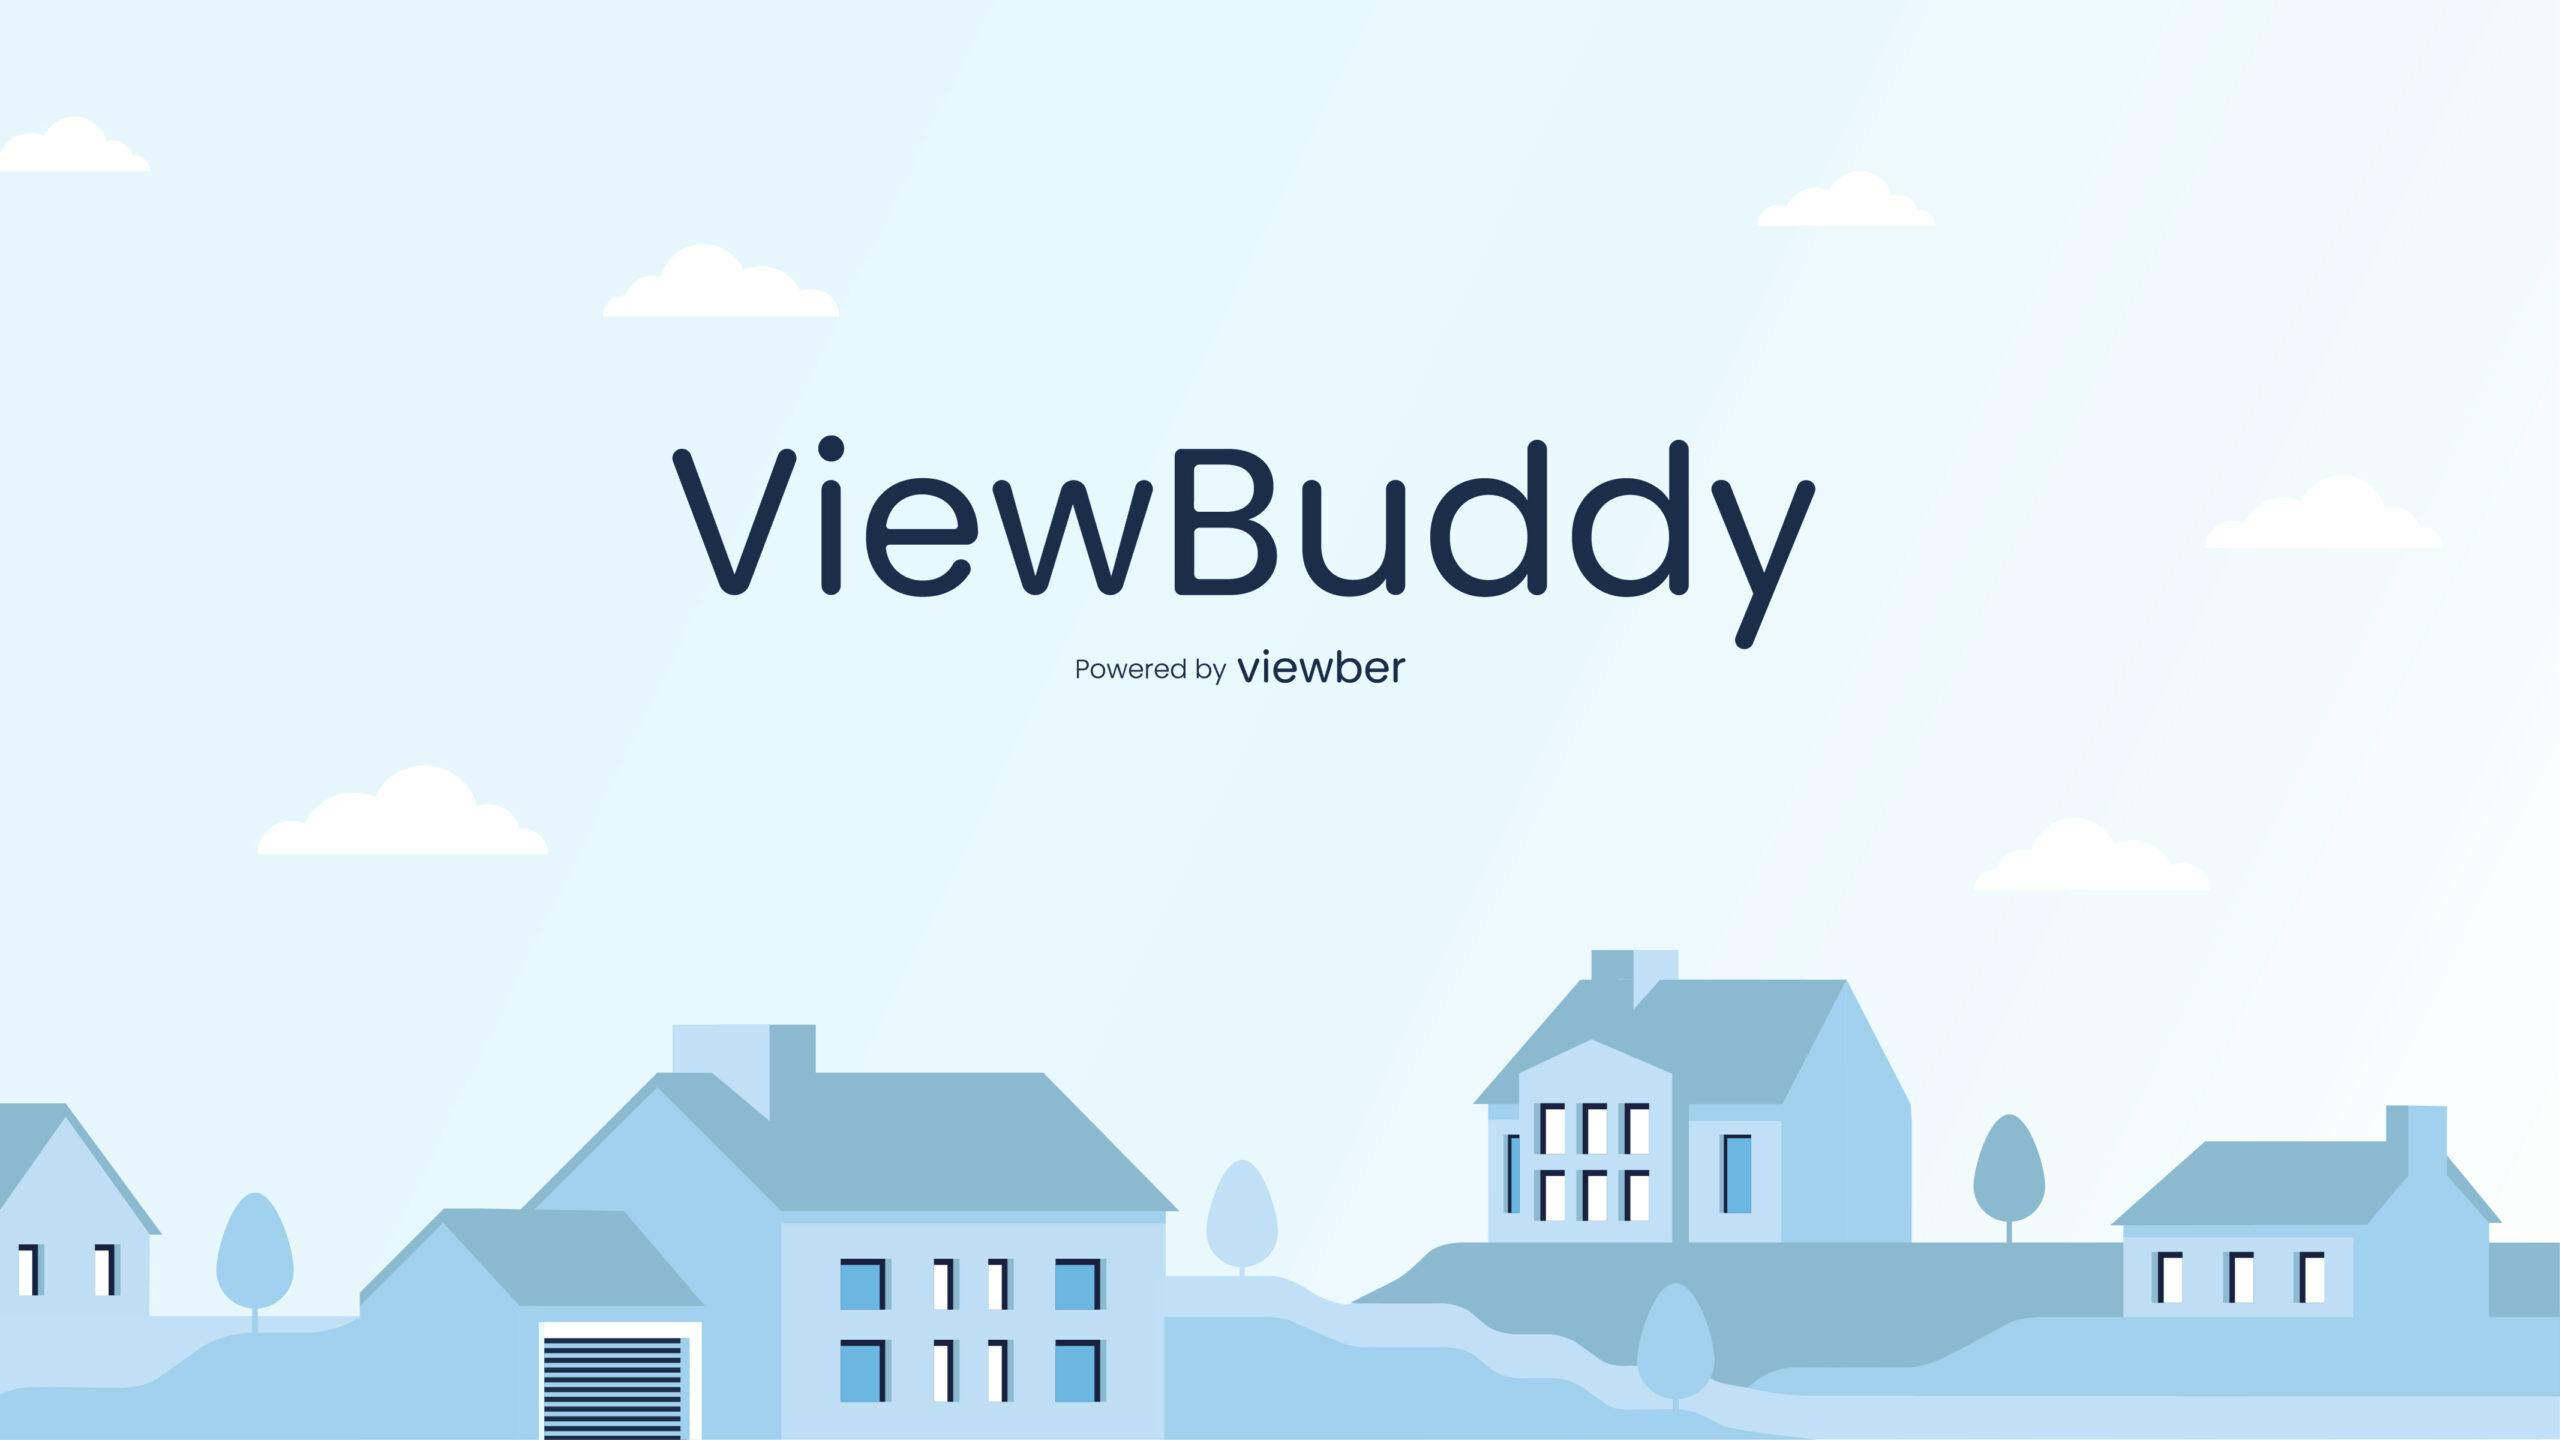 Introducing the ViewBuddy App